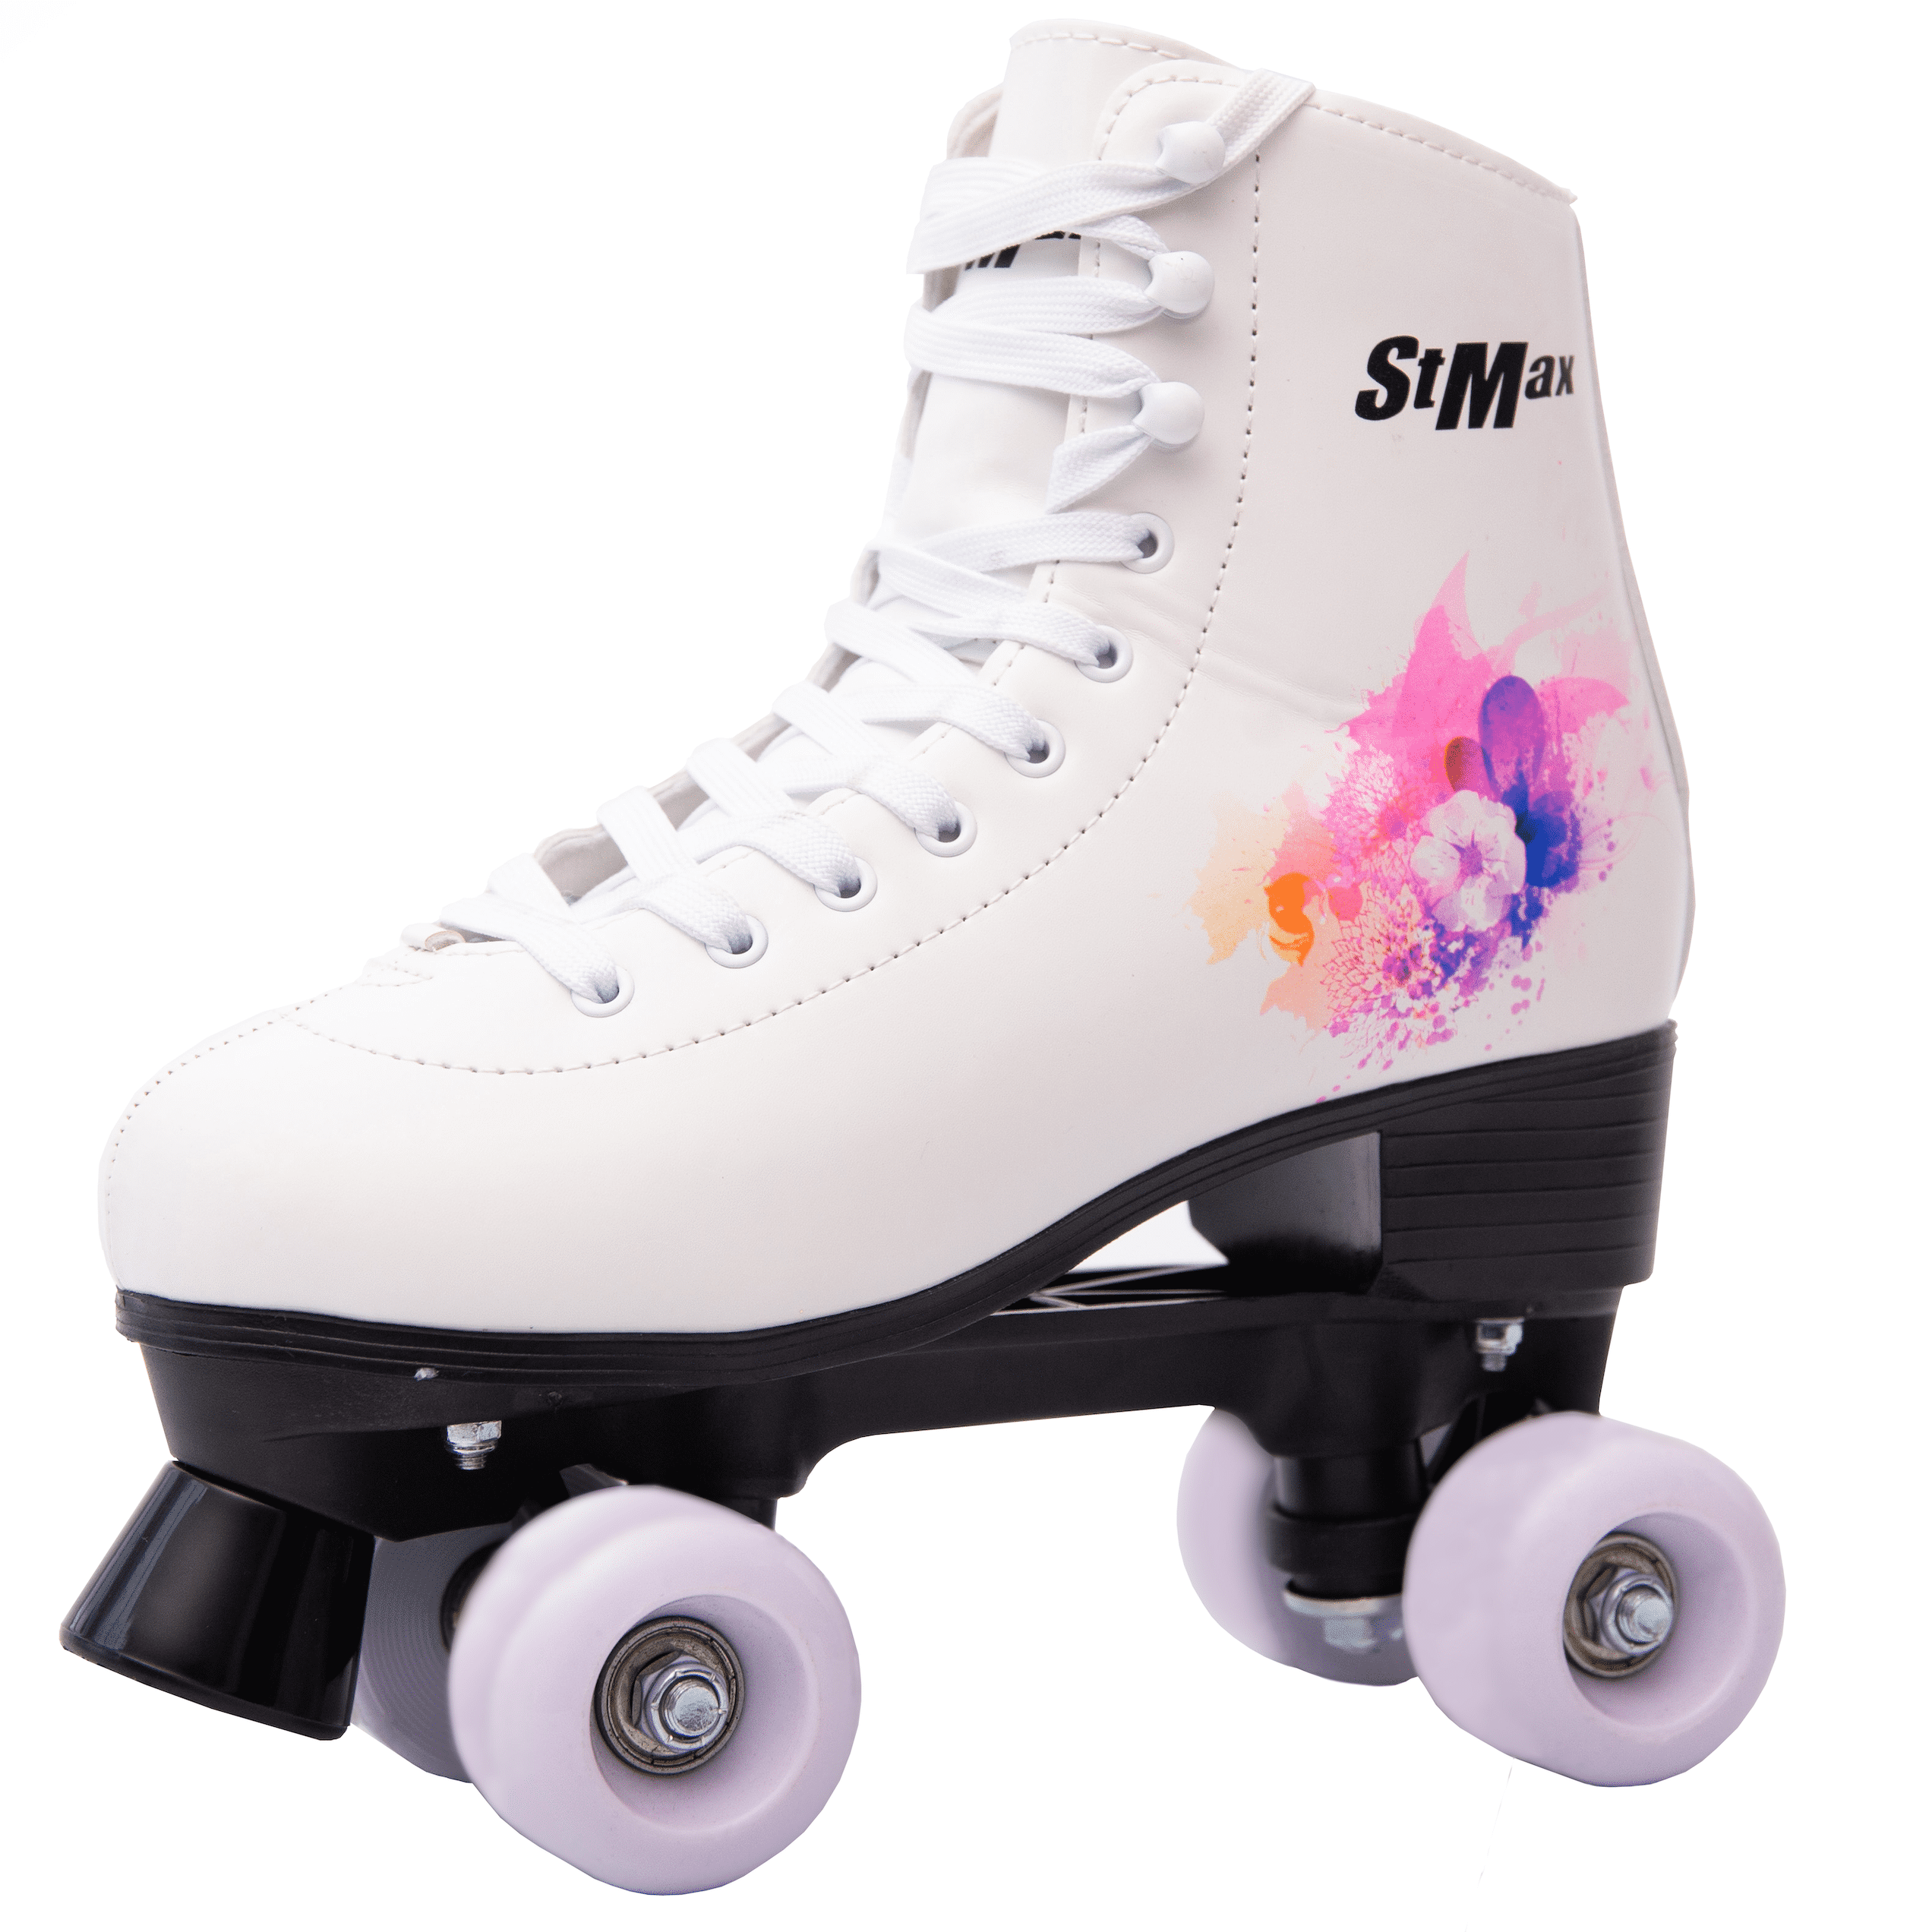 Roller Skates for Girls Size 5.5 Lemon Heart for Toddler and Kids Derby Light Quad with Adjustable Lace System Outdoor rollerskates Girl 37 